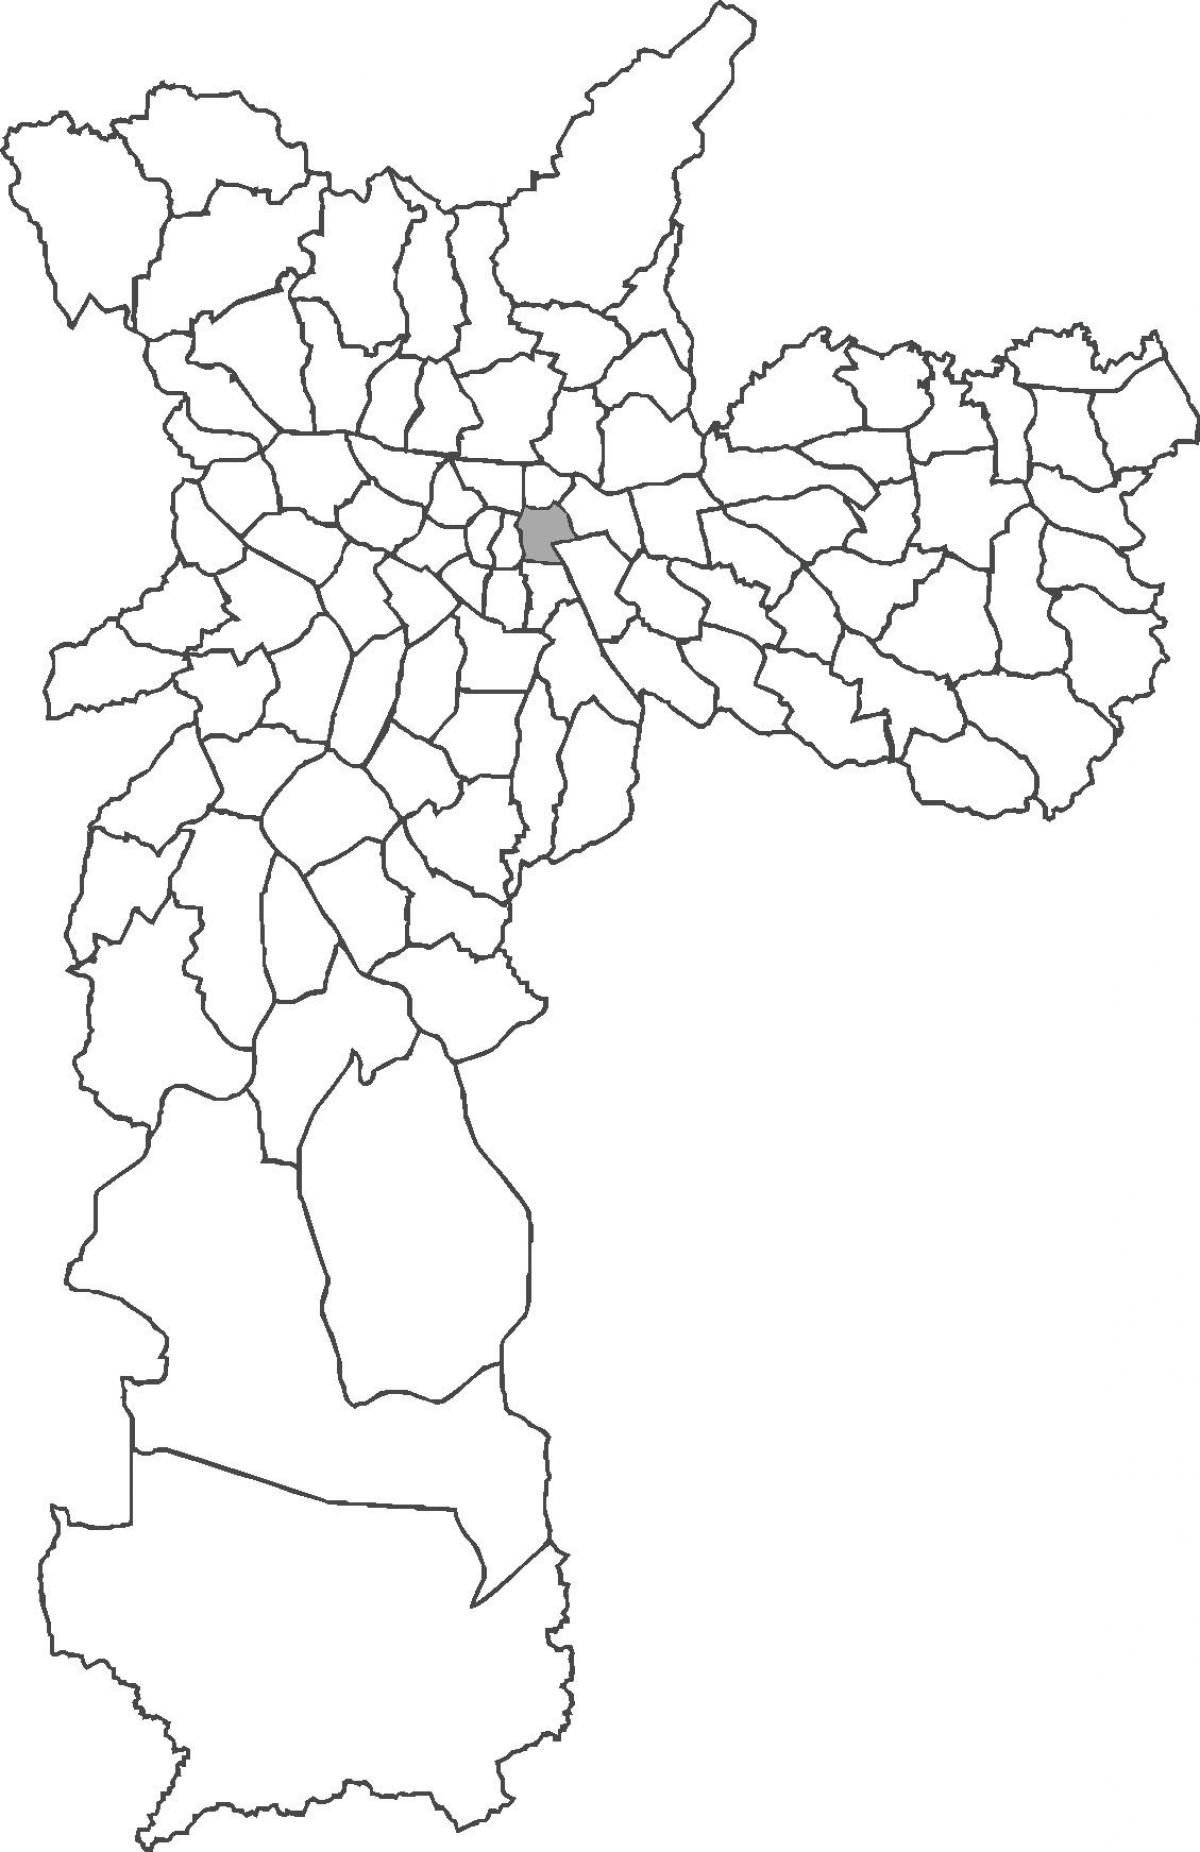 Карта на Brás област